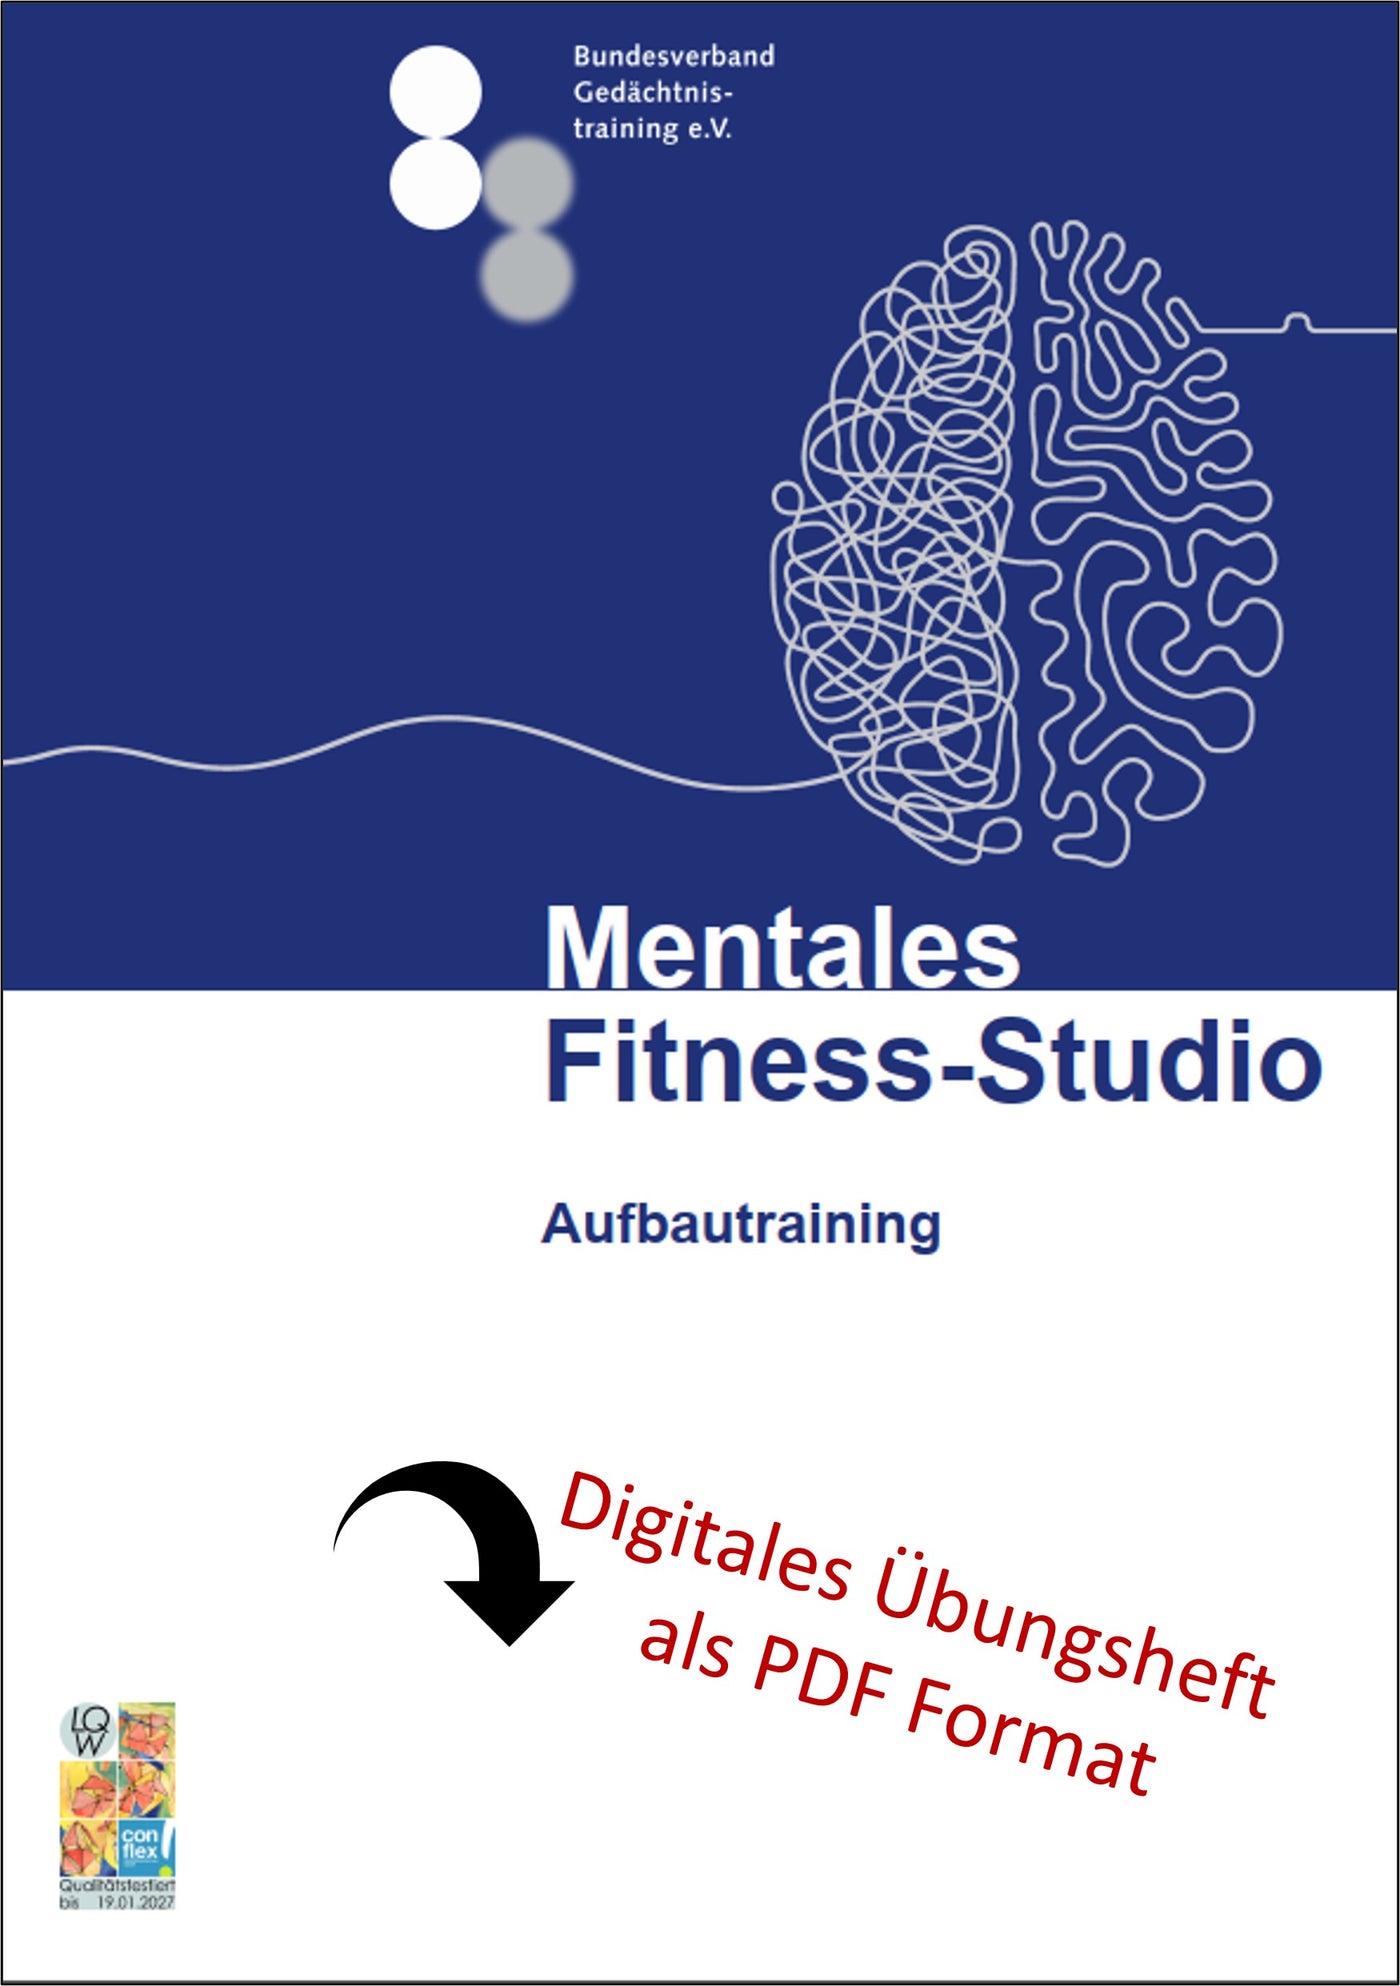 Mentales Fitness-Studio Teil I - Aufbautraining (Übungsheft als PDF Format)